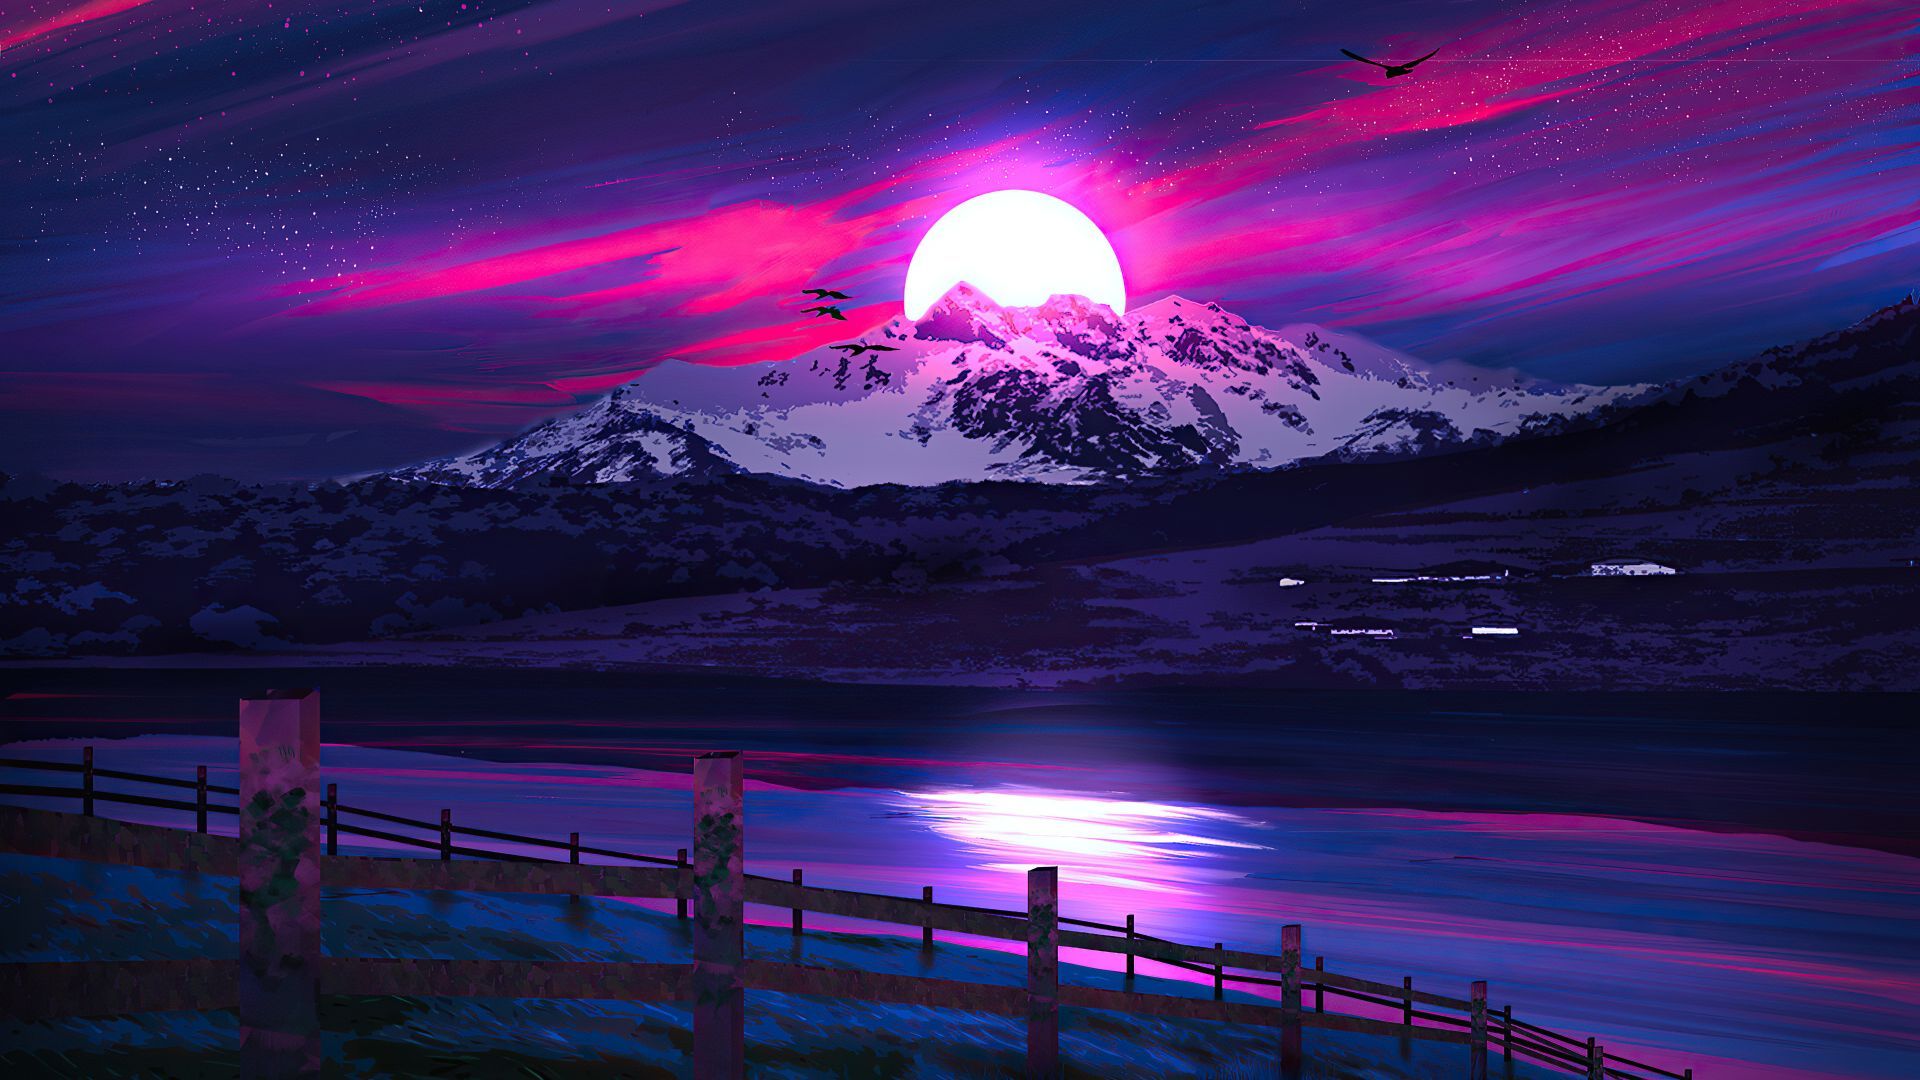 Desktop wallpaper lake, woonden fence, mountains, landscape, sunset, neon art, HD image, picture, background, f80e73